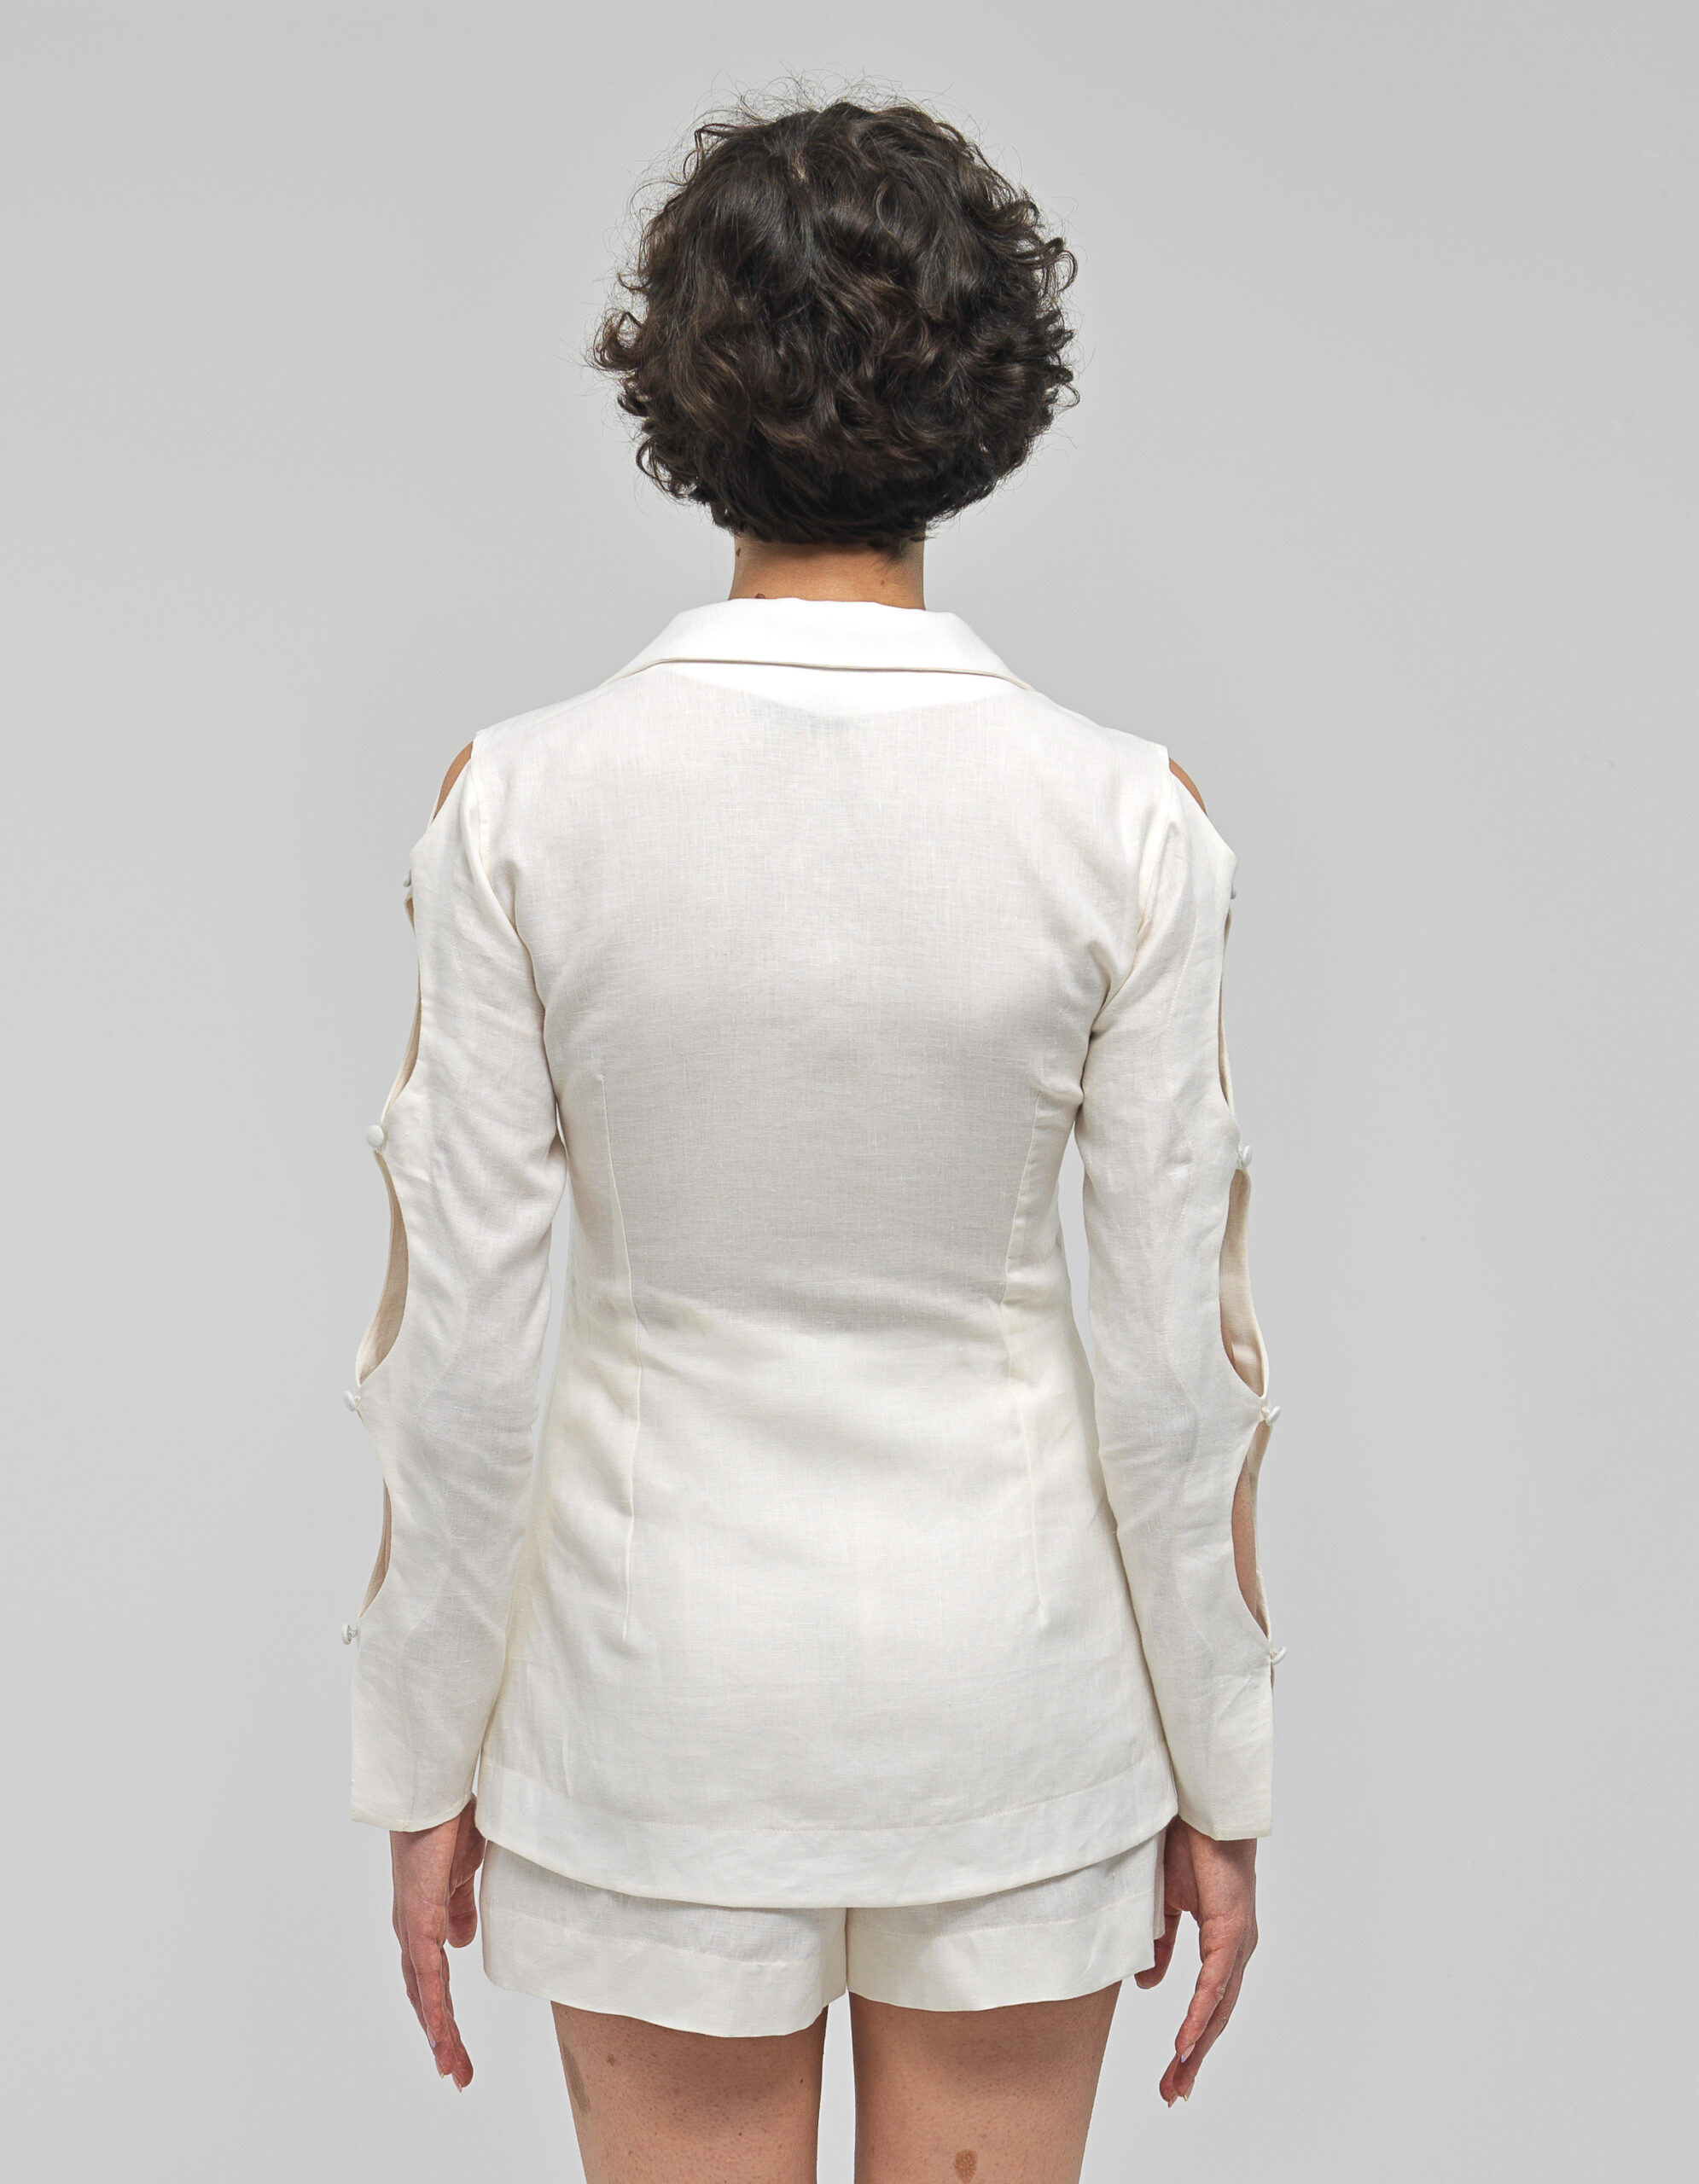 Shop Maet Nereus White Linen Collared Shirt